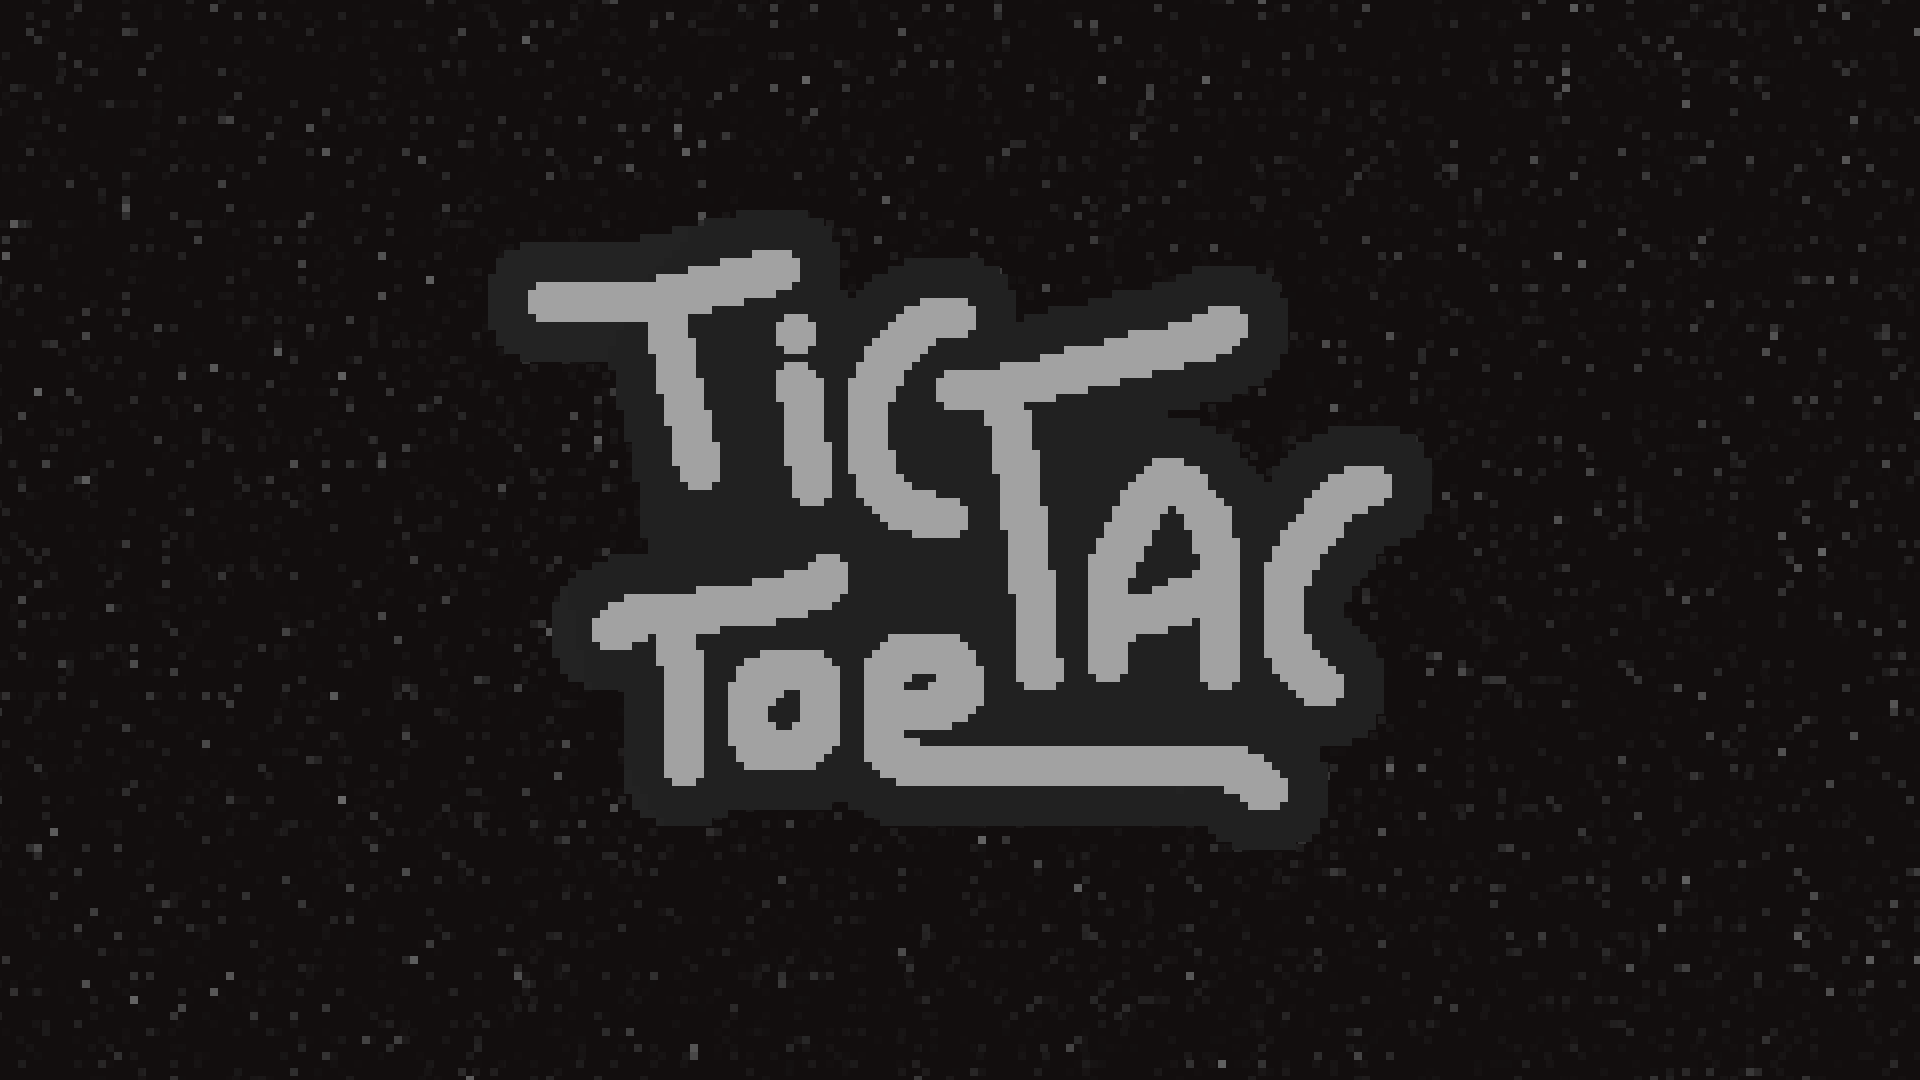 Tic Tac Toe - a simple take on machine learning and Ai development